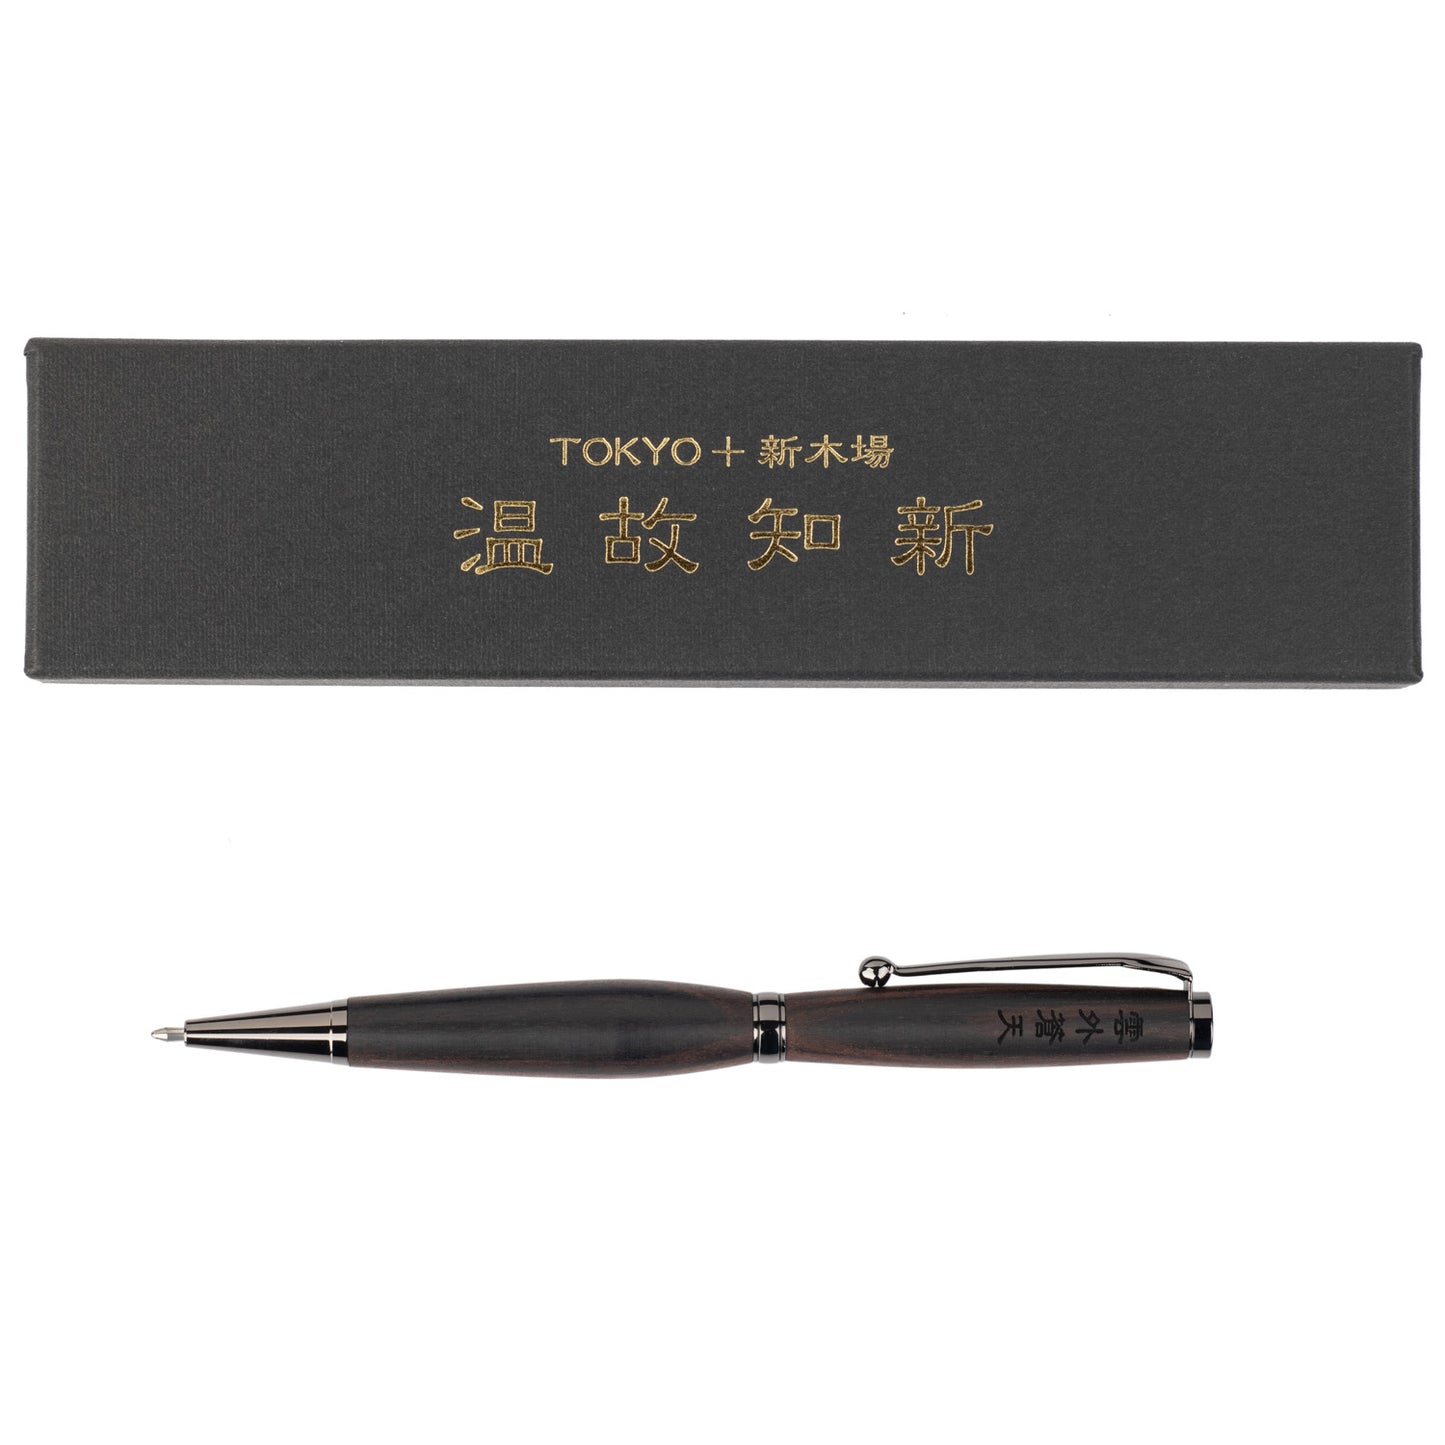 Premium Ebony Black Japanese Ballpoint Pen and gift box